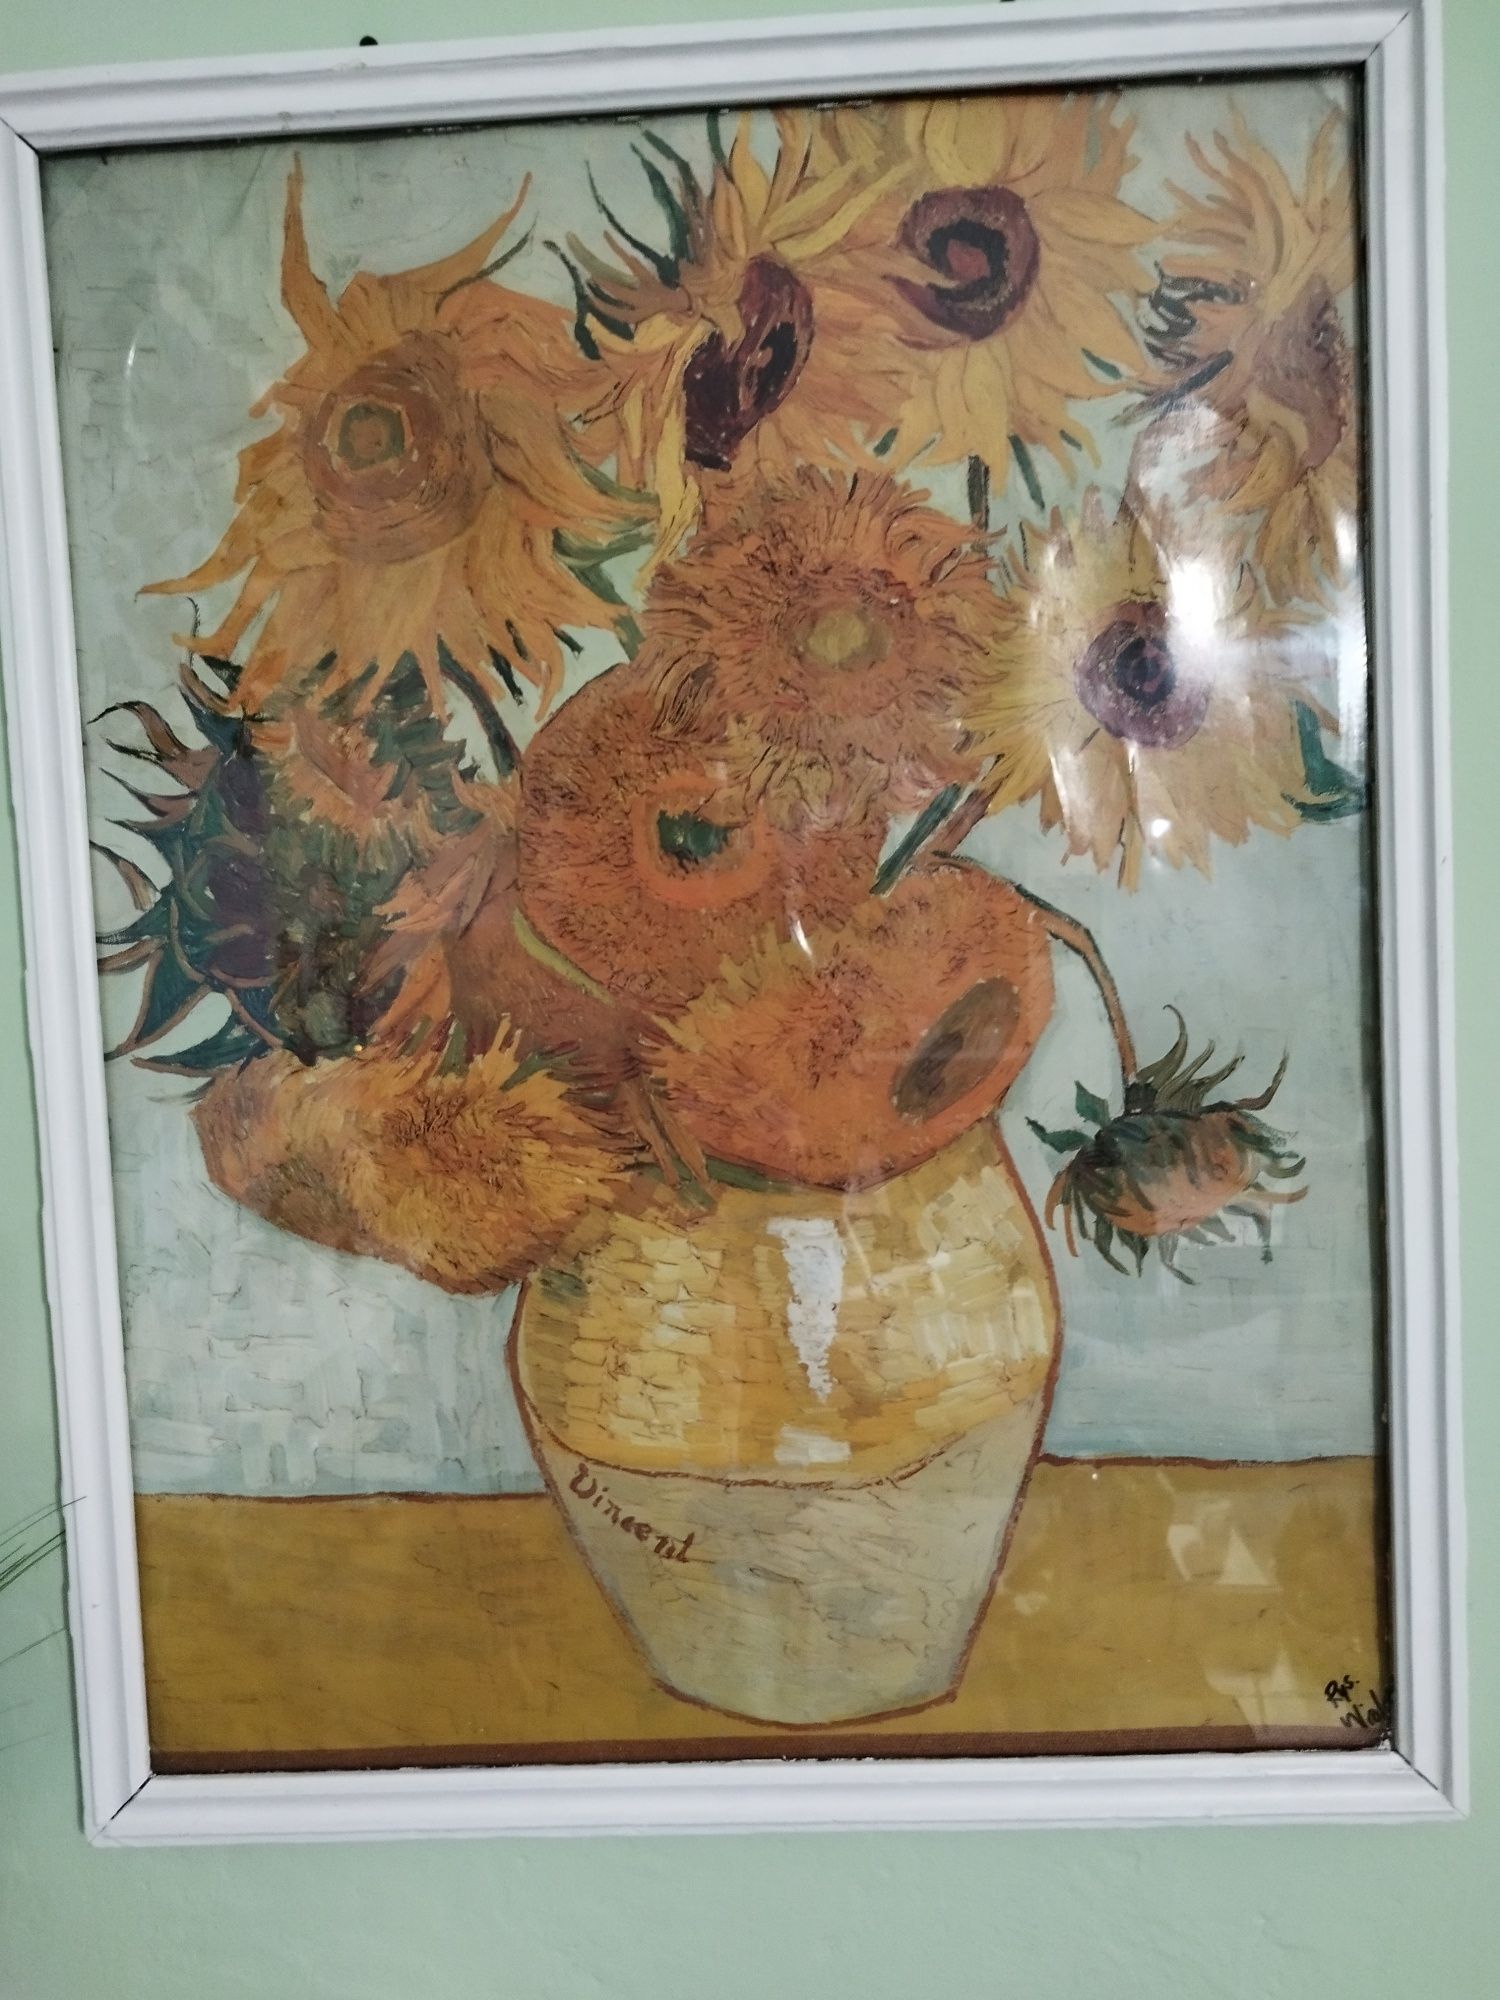 Obraz Vincenta van Gogha "Słoneczniki" kopia